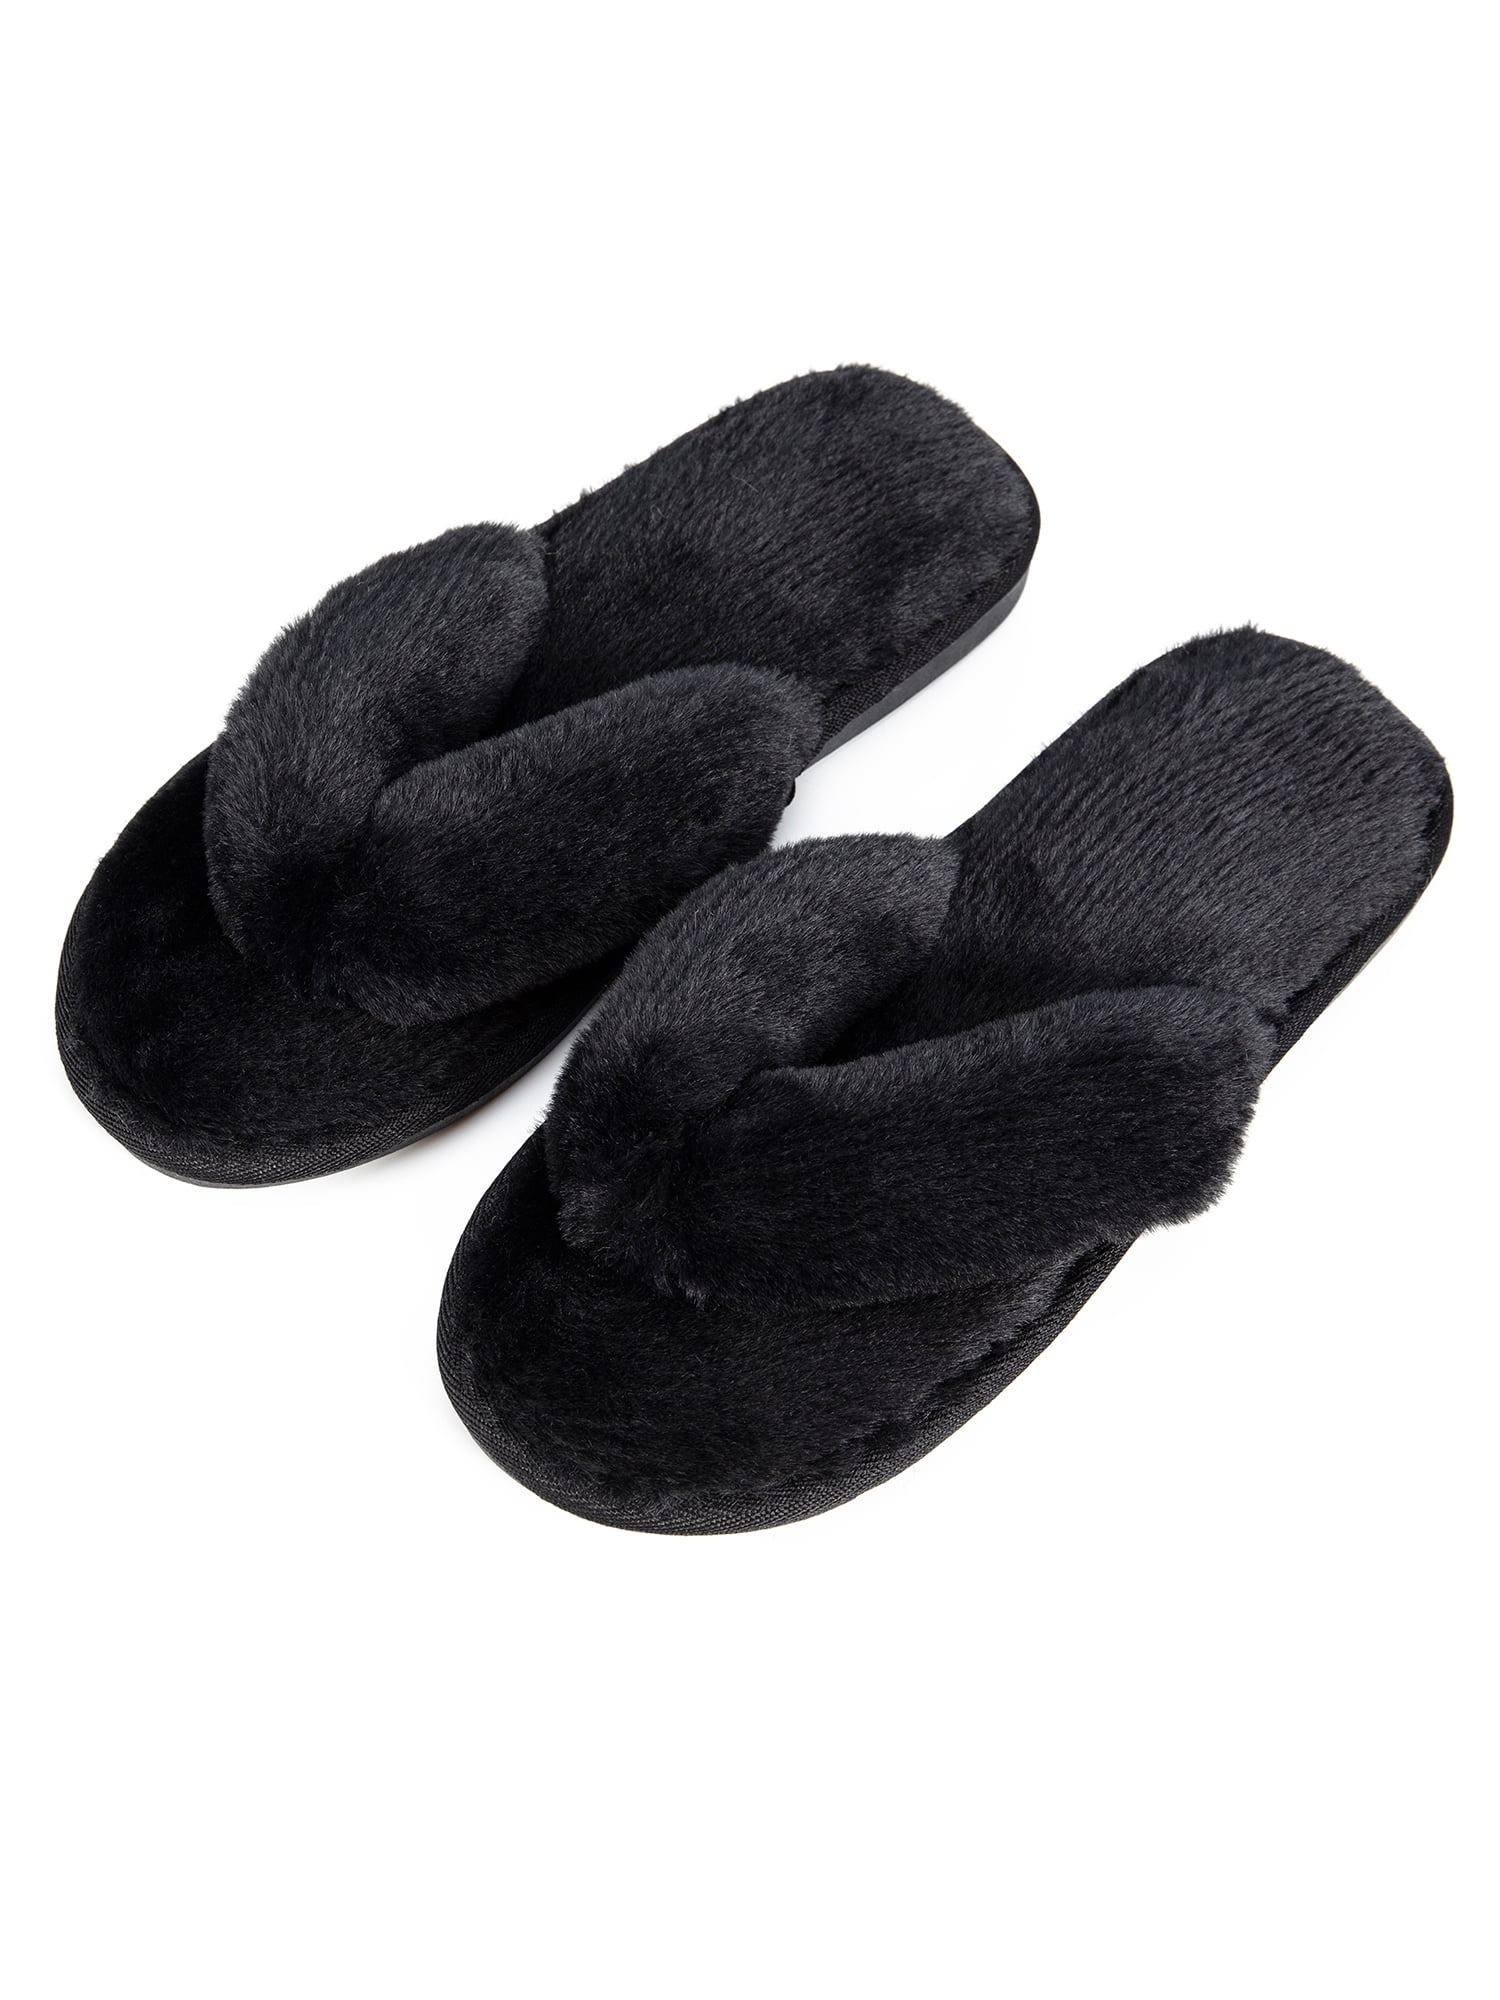 Masbird Slippers for Women，Women's Soft Bottom Couples Memory Foam Slip On House Slippers Shoes Indoor Flip Flop 